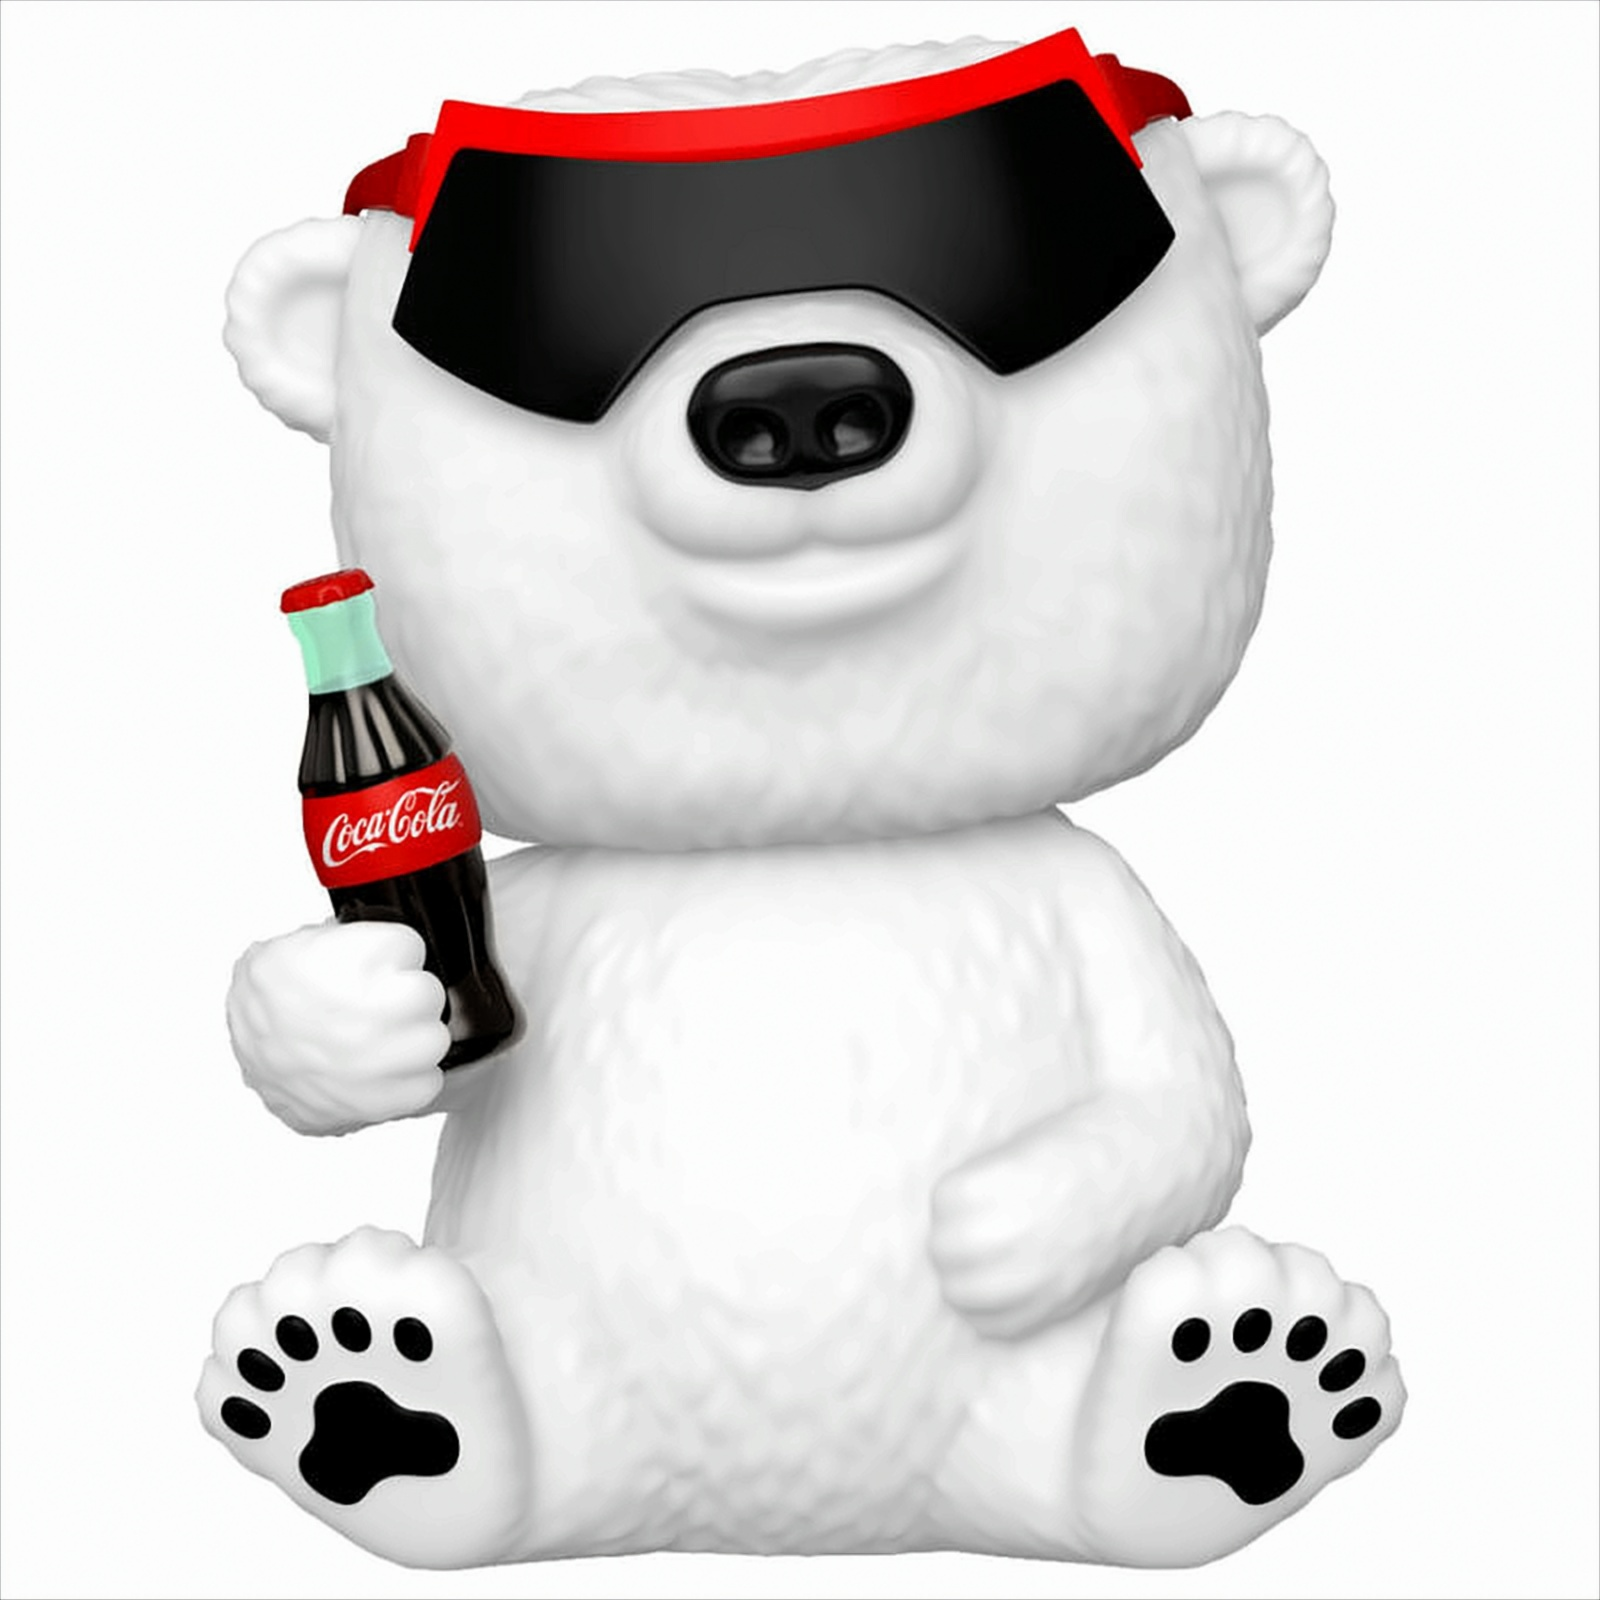 - Icons POP Polar 90s - Ad Coca-Cola - Bear